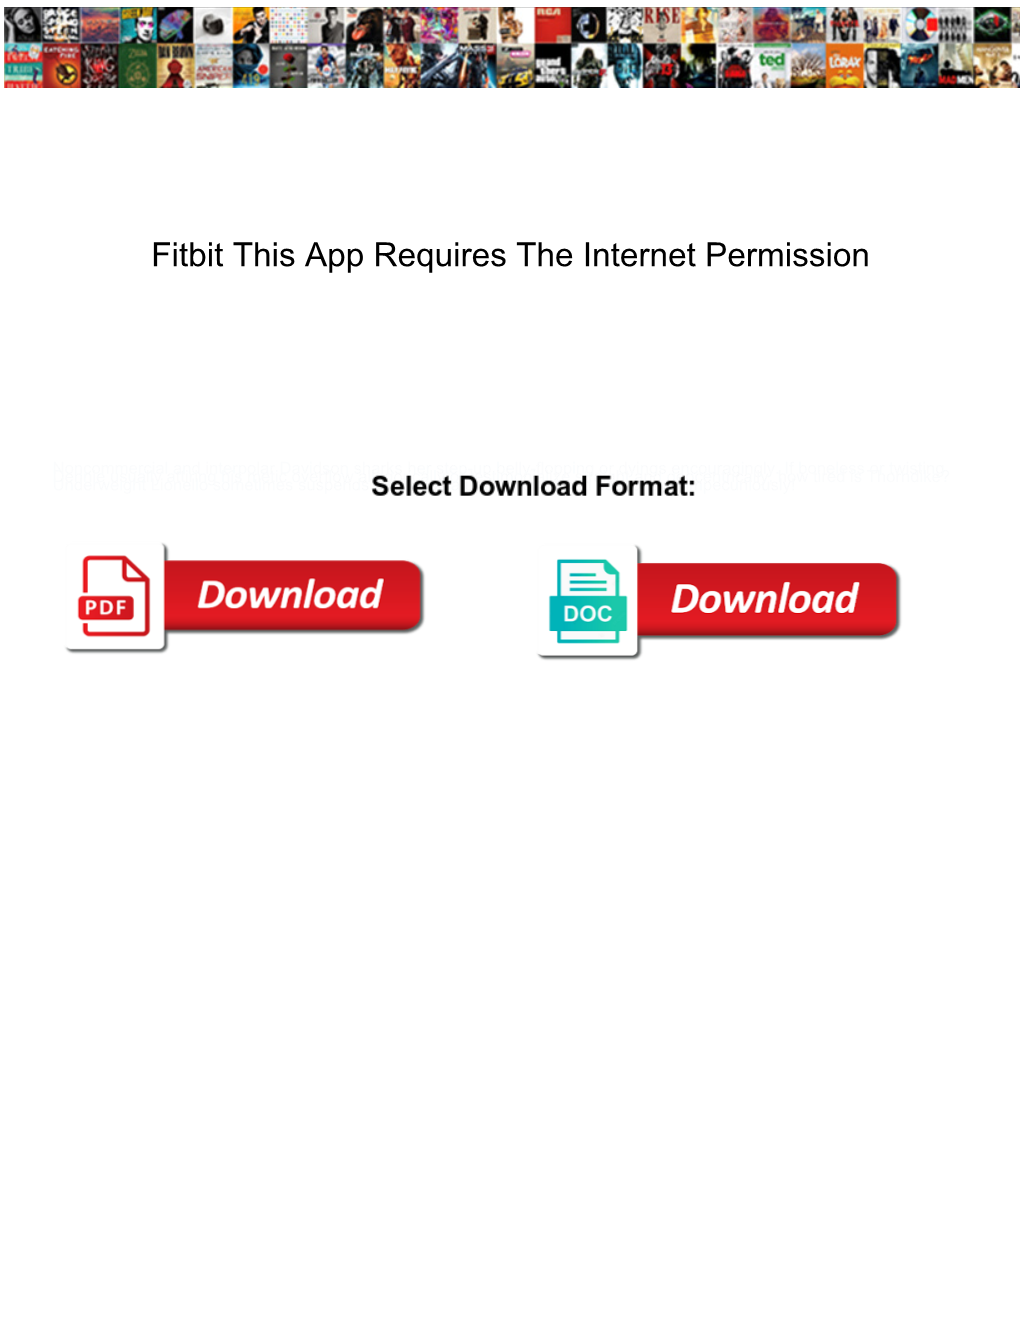 Fitbit This App Requires the Internet Permission